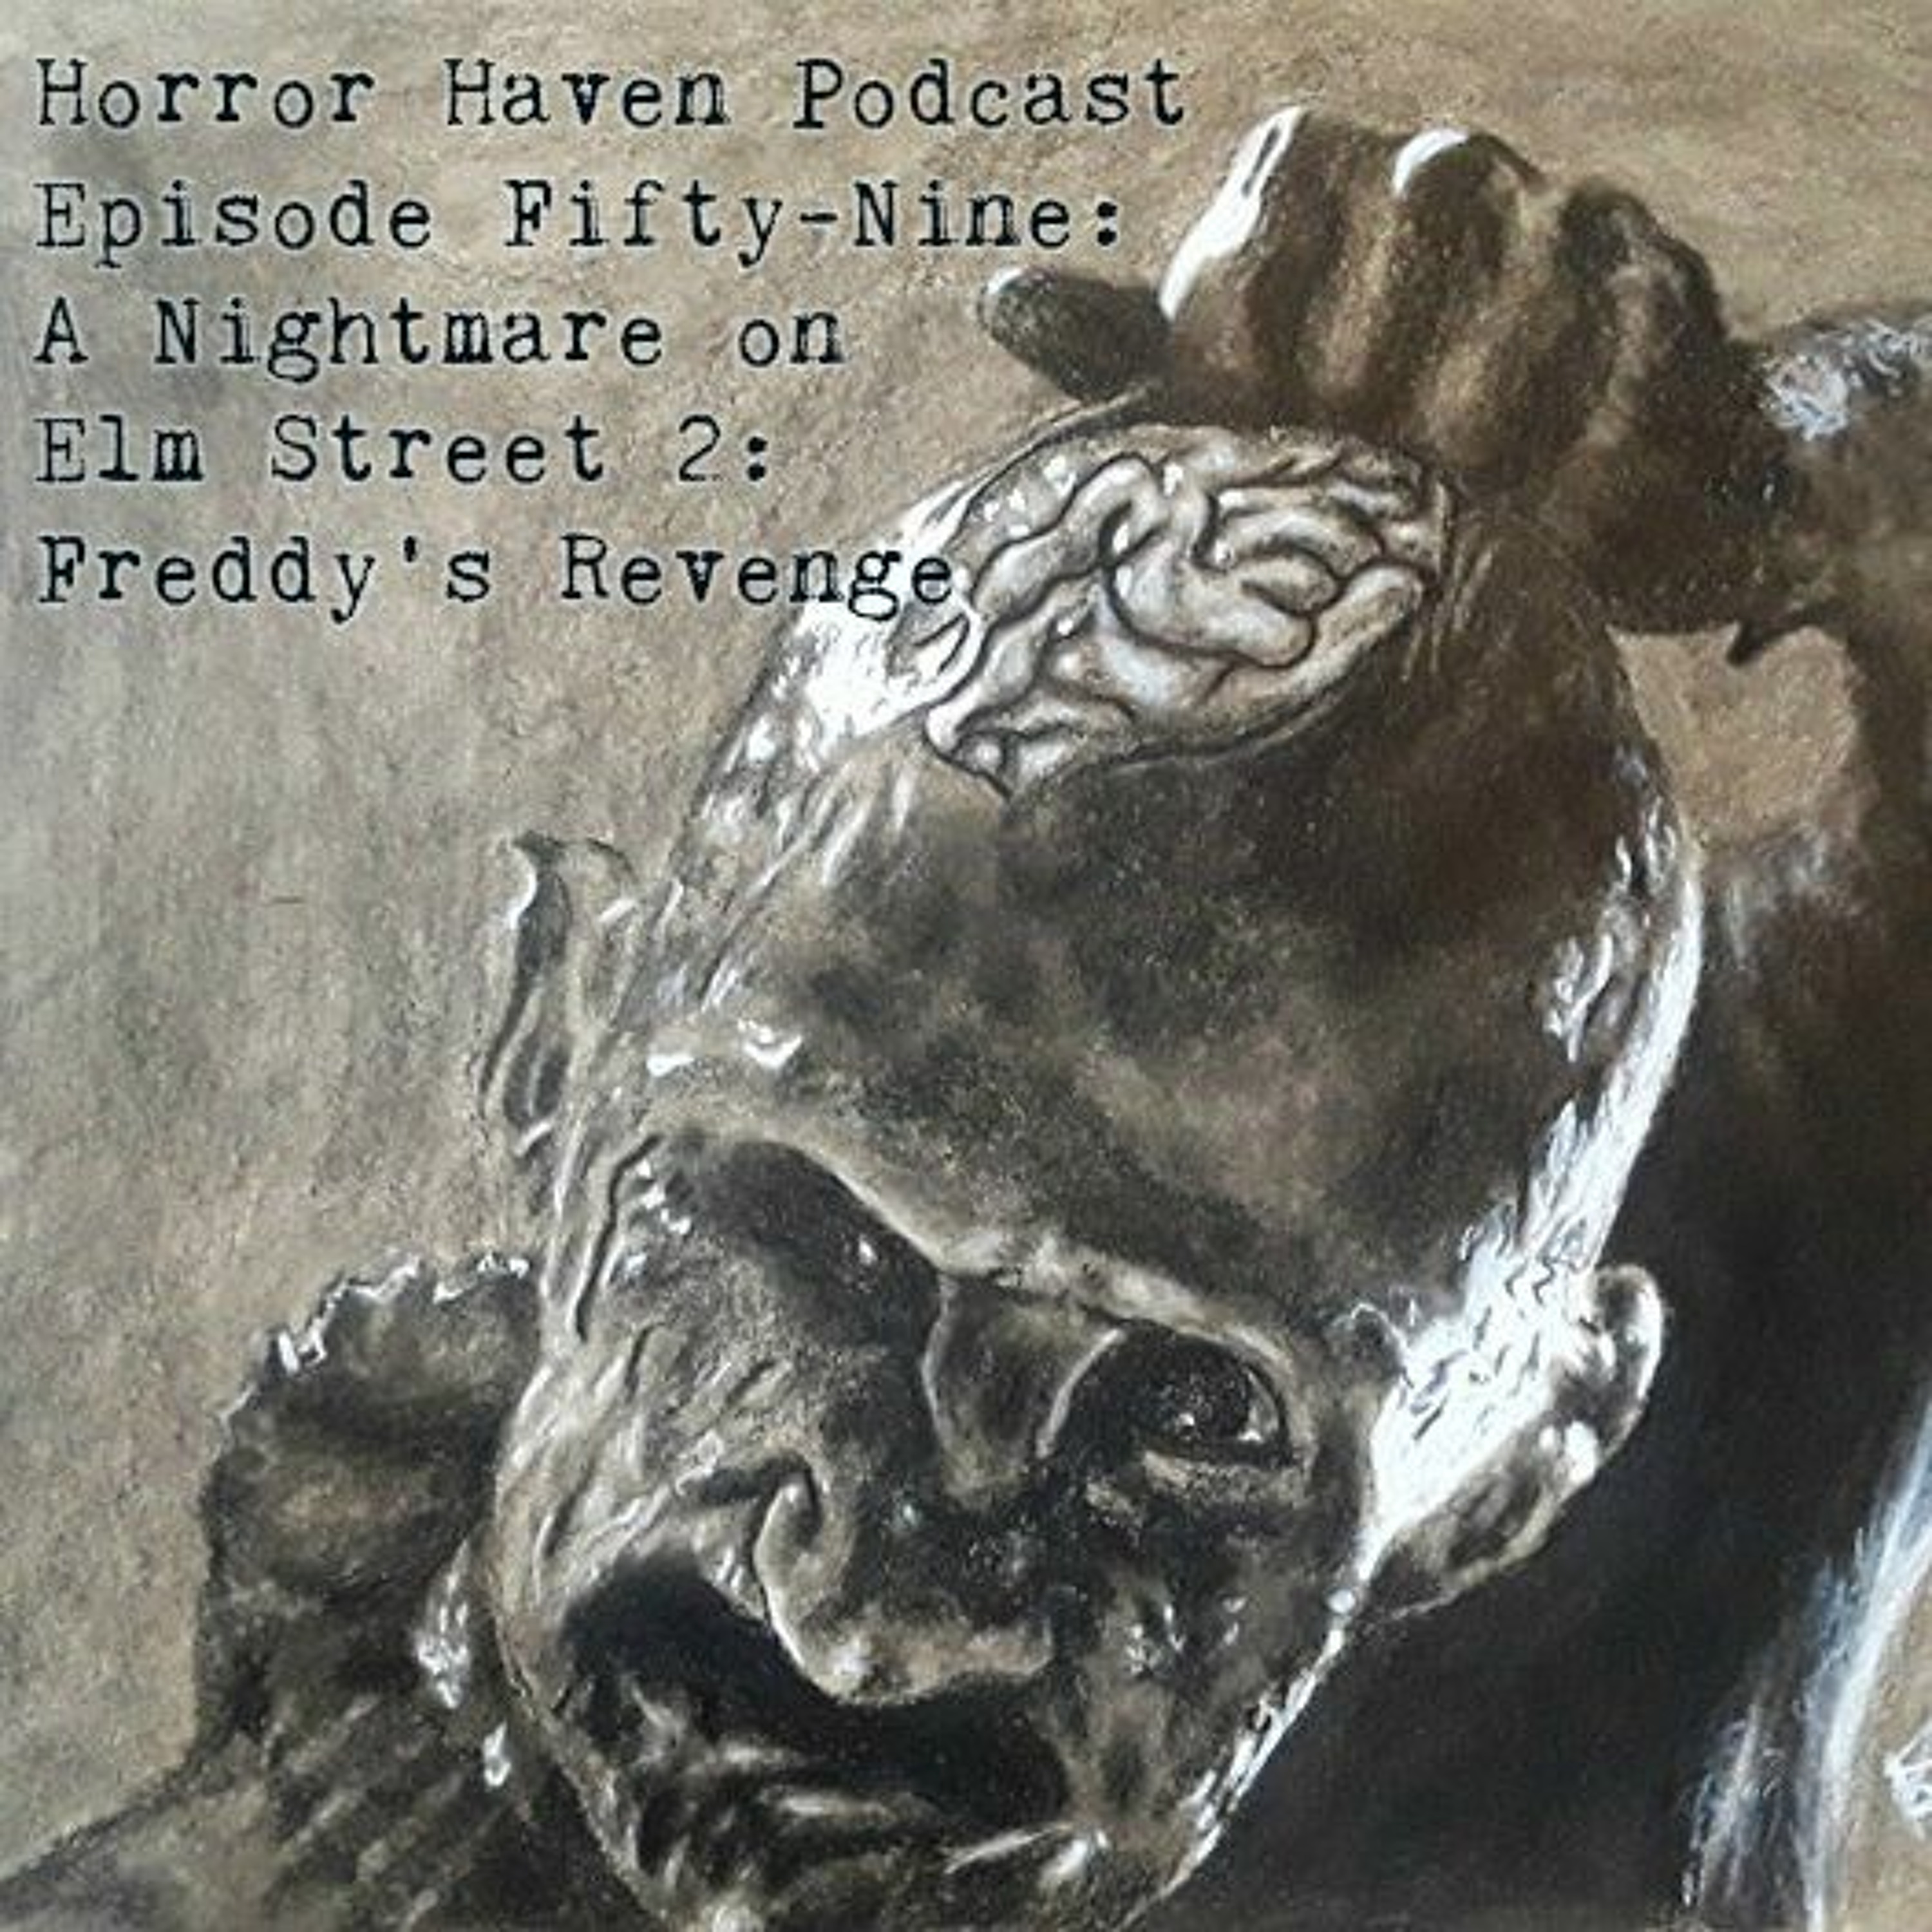 Episode Fifty-Nine:  A Nightmare on Elm Street 2: Freddy’s Revenge